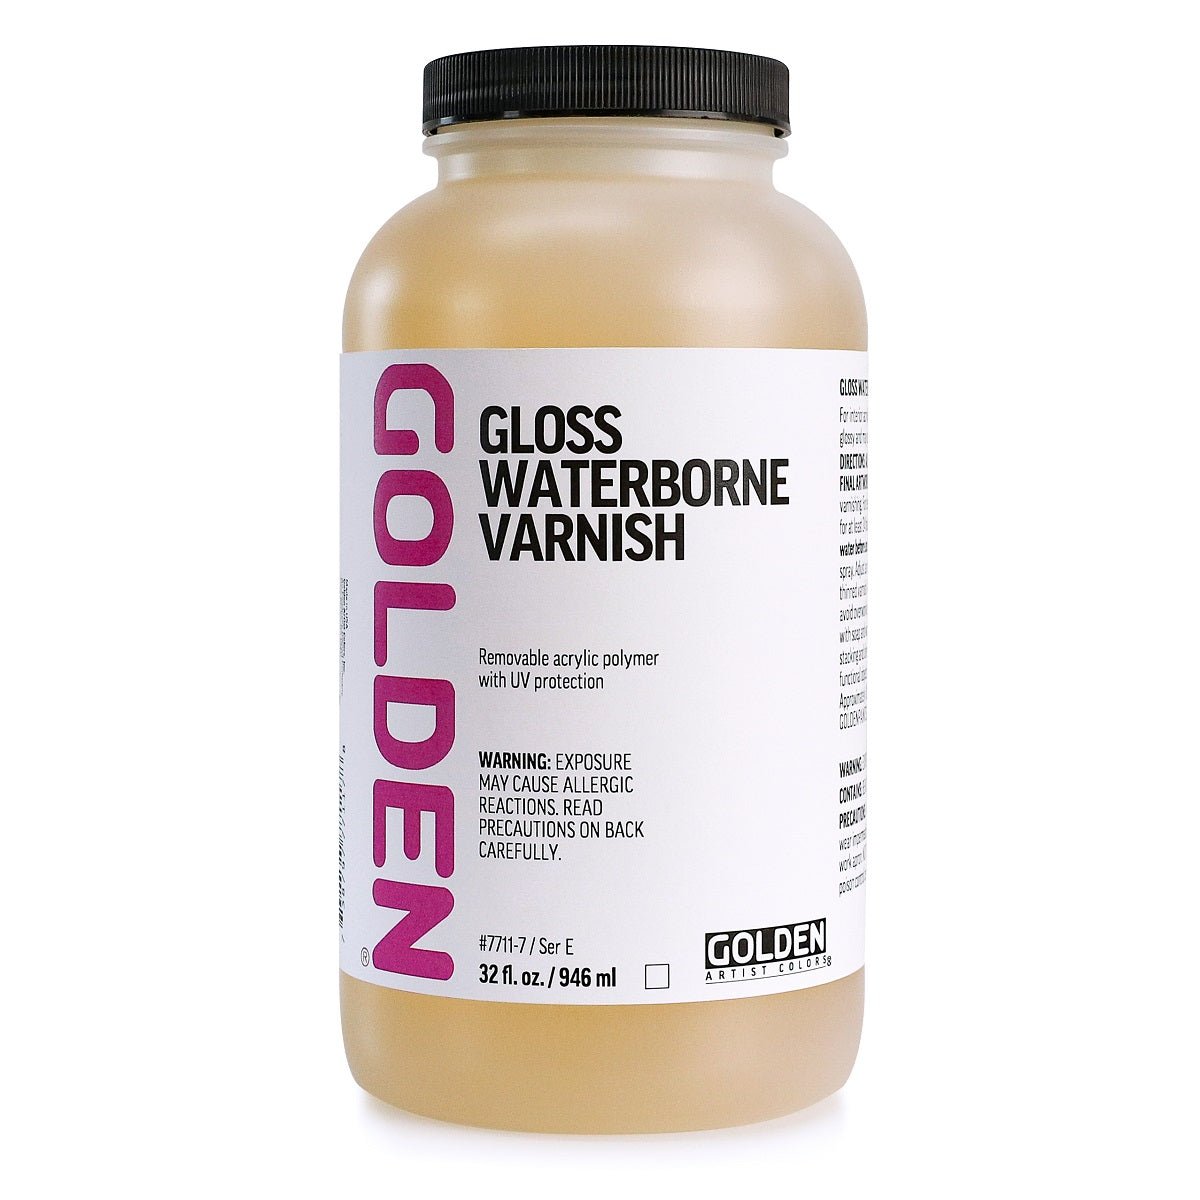 Golden Waterborne Varnish (with UVLS) - Gloss - 32 oz - merriartist.com